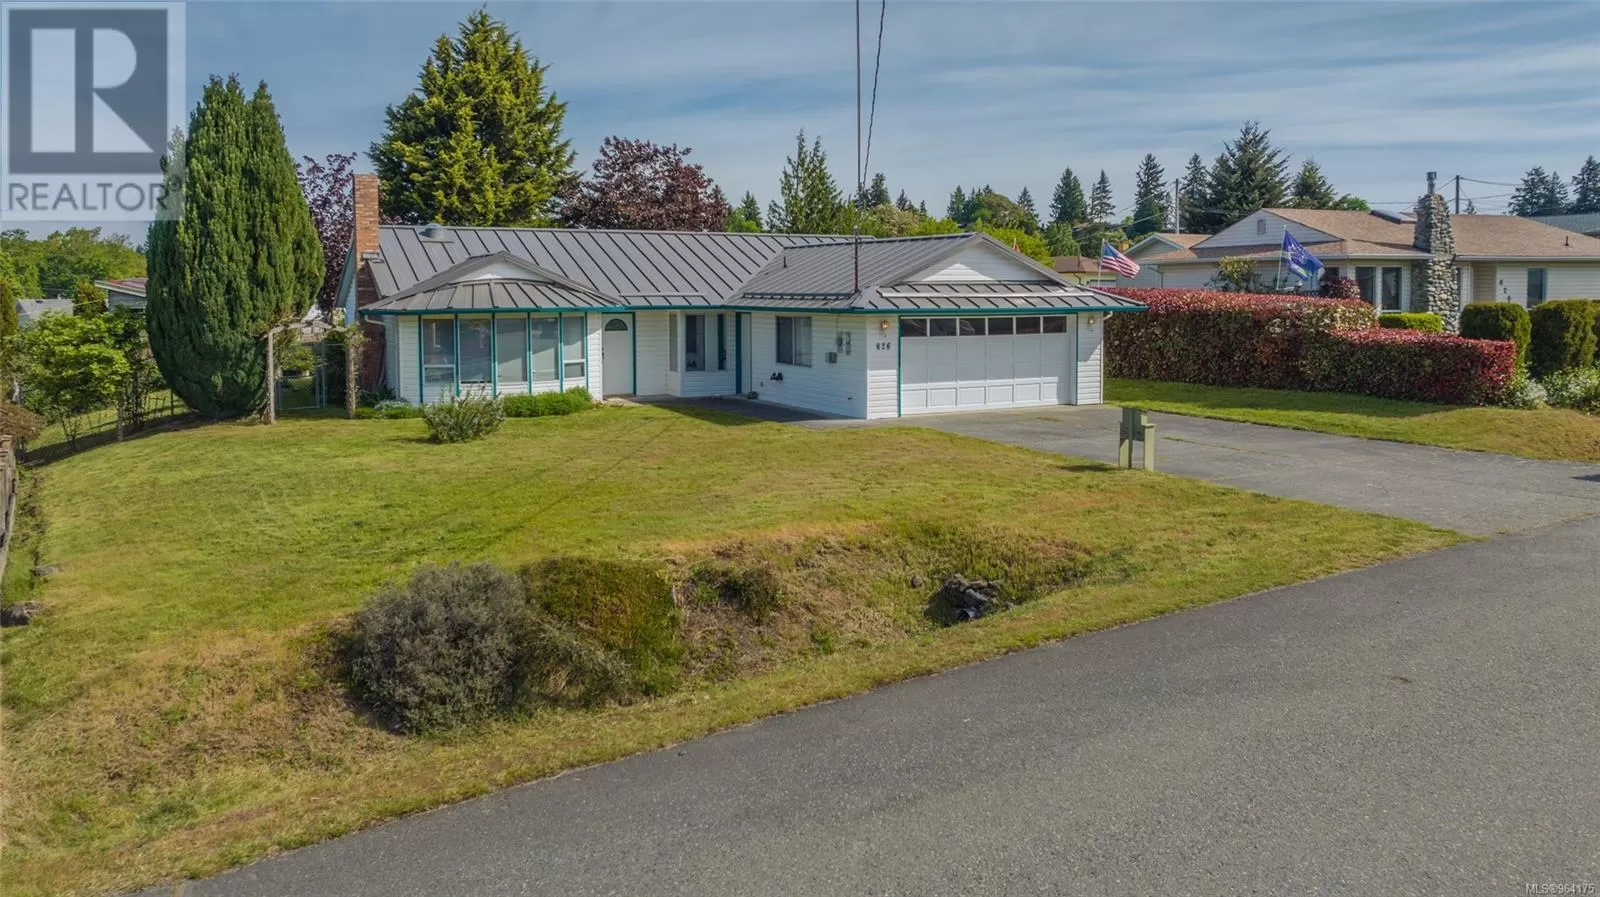 House for rent: 826 Rockland Rd, Nanaimo, British Columbia V9R 6G8